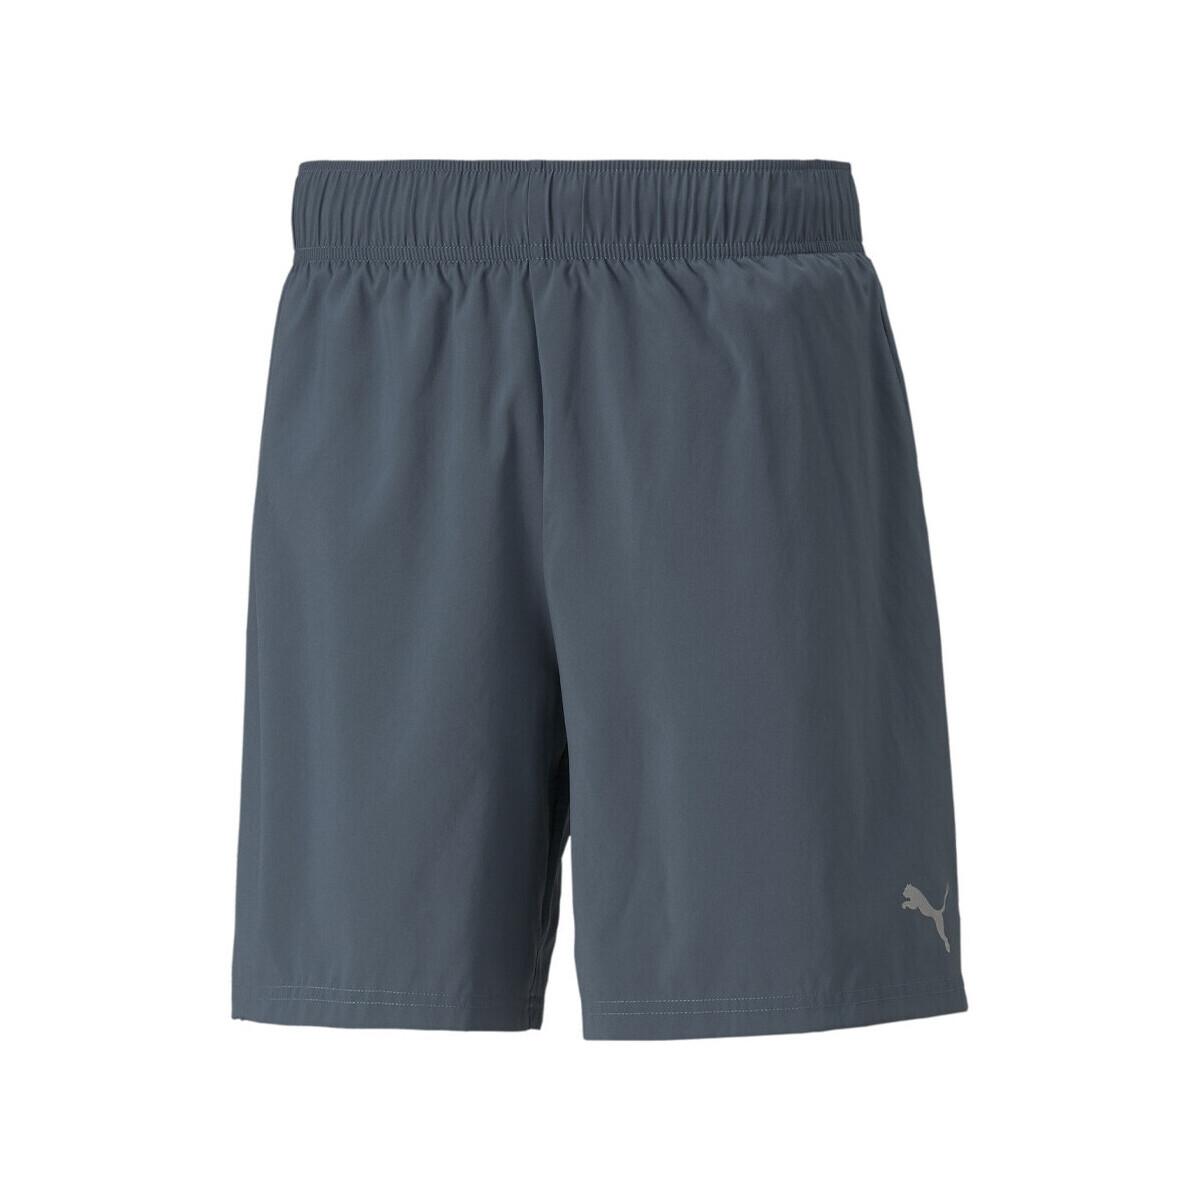 Kleidung Herren Shorts / Bermudas Puma 521351-42 Grau